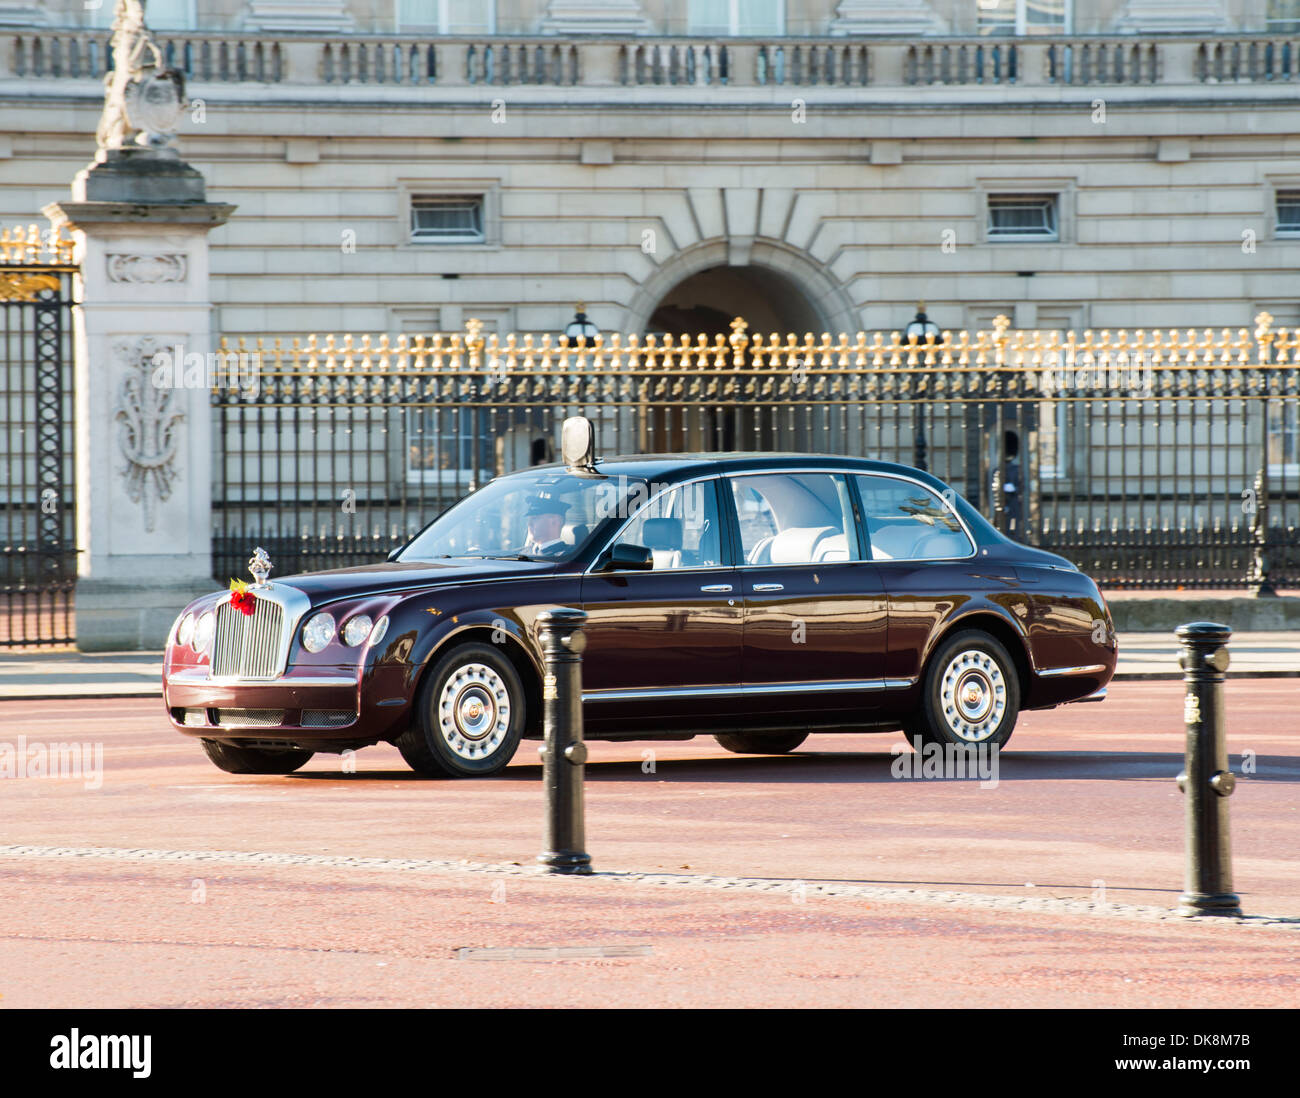 Buckingham palace and royal cars Stock Photo